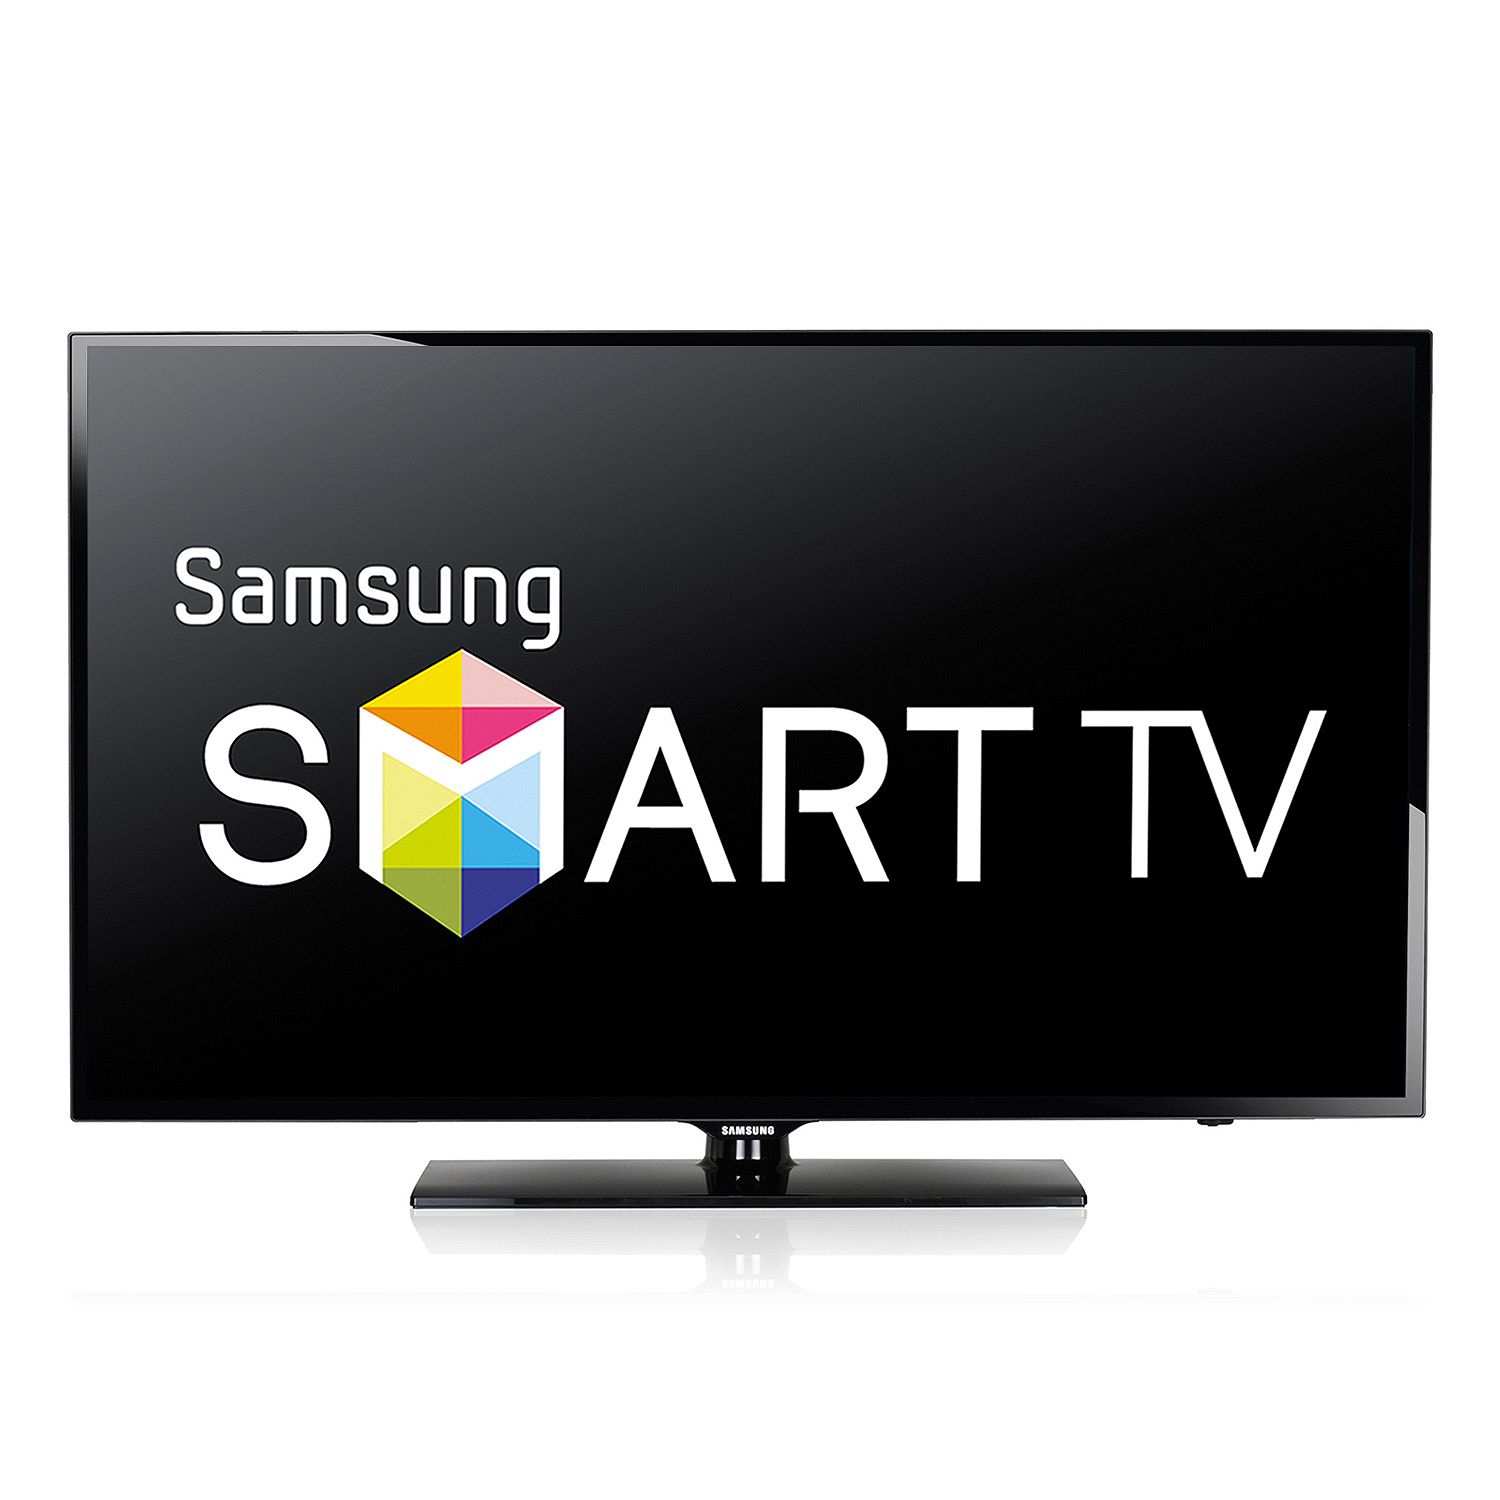 Телевизор с wifi рейтинг. Смарт ТВ Samsung. Телевизор Samsung Smart TV. Самсунг смарт ТВ 32. Led телевизор Samsung смарт.